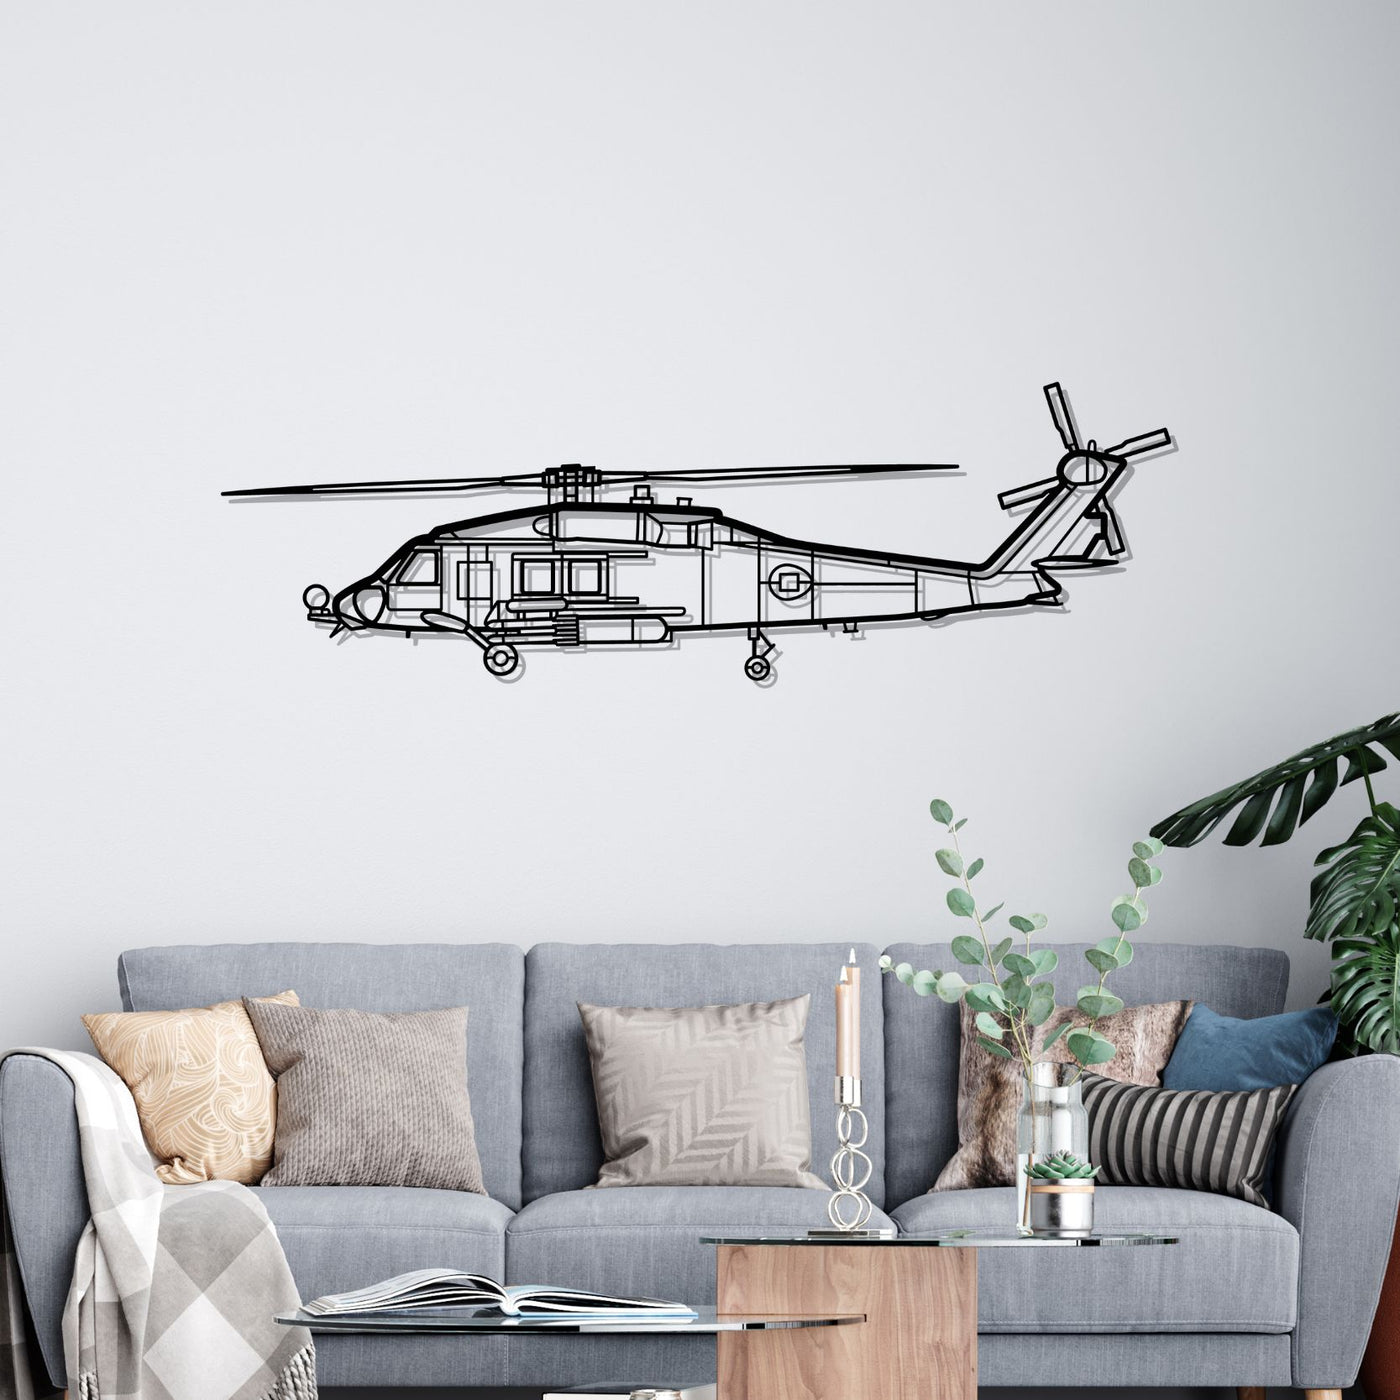 HH60-H Sea Hawk Silhouette Metal Wall Art